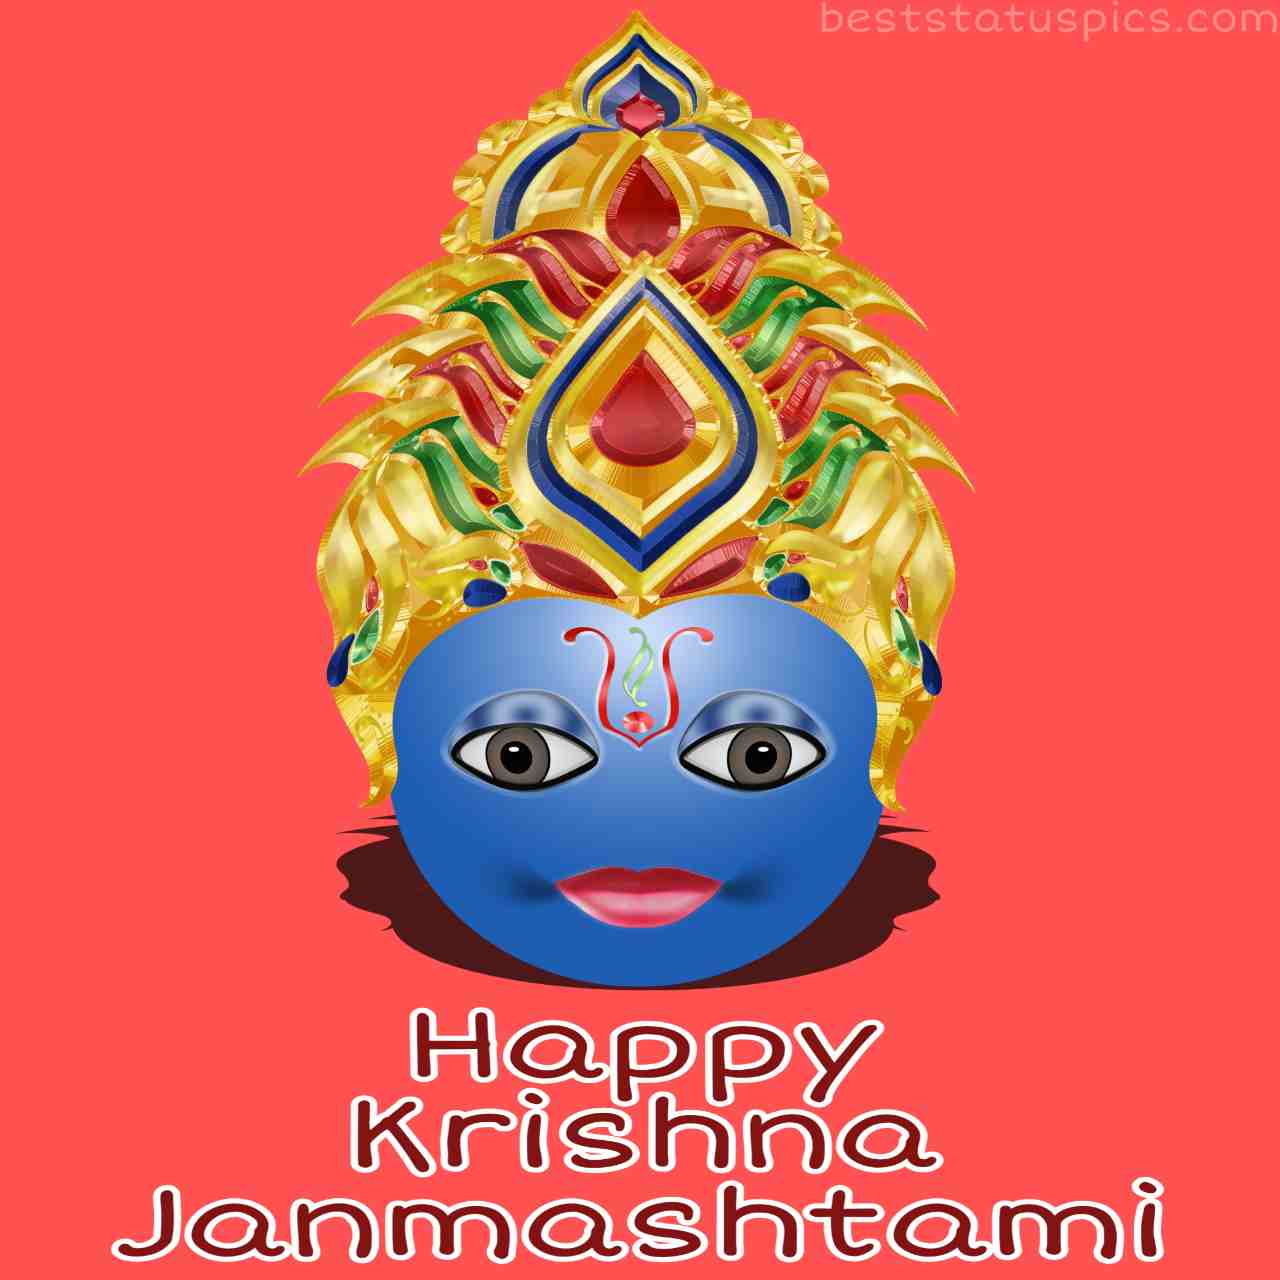 53+ Happy Krishna Janmashtami 2022 Wishes Images, Pics - Best Status Pics